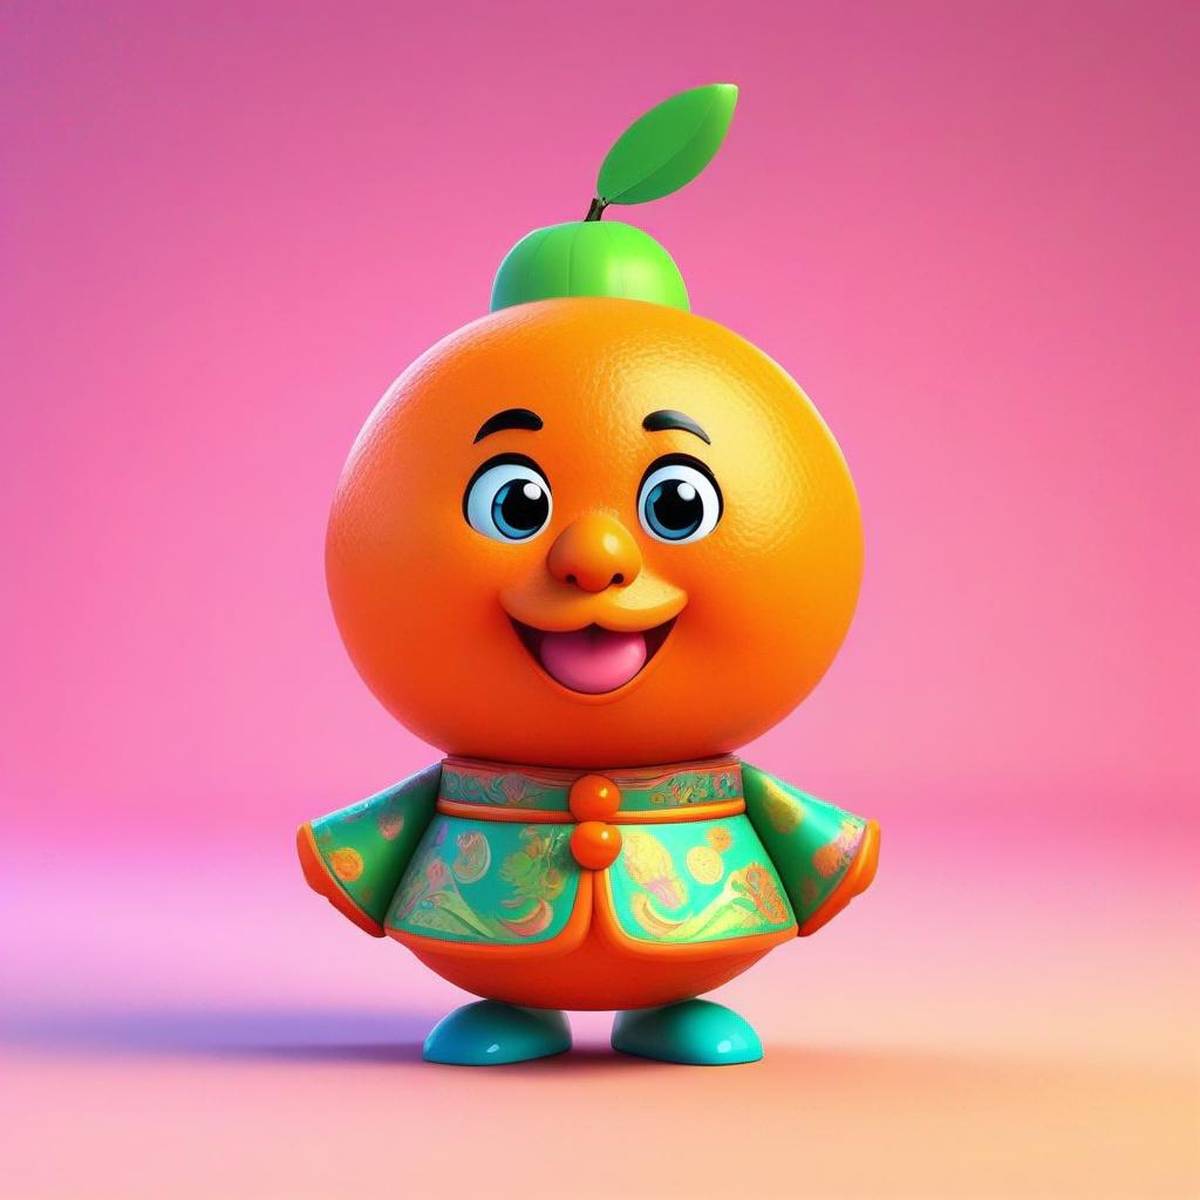 Mandarin puns